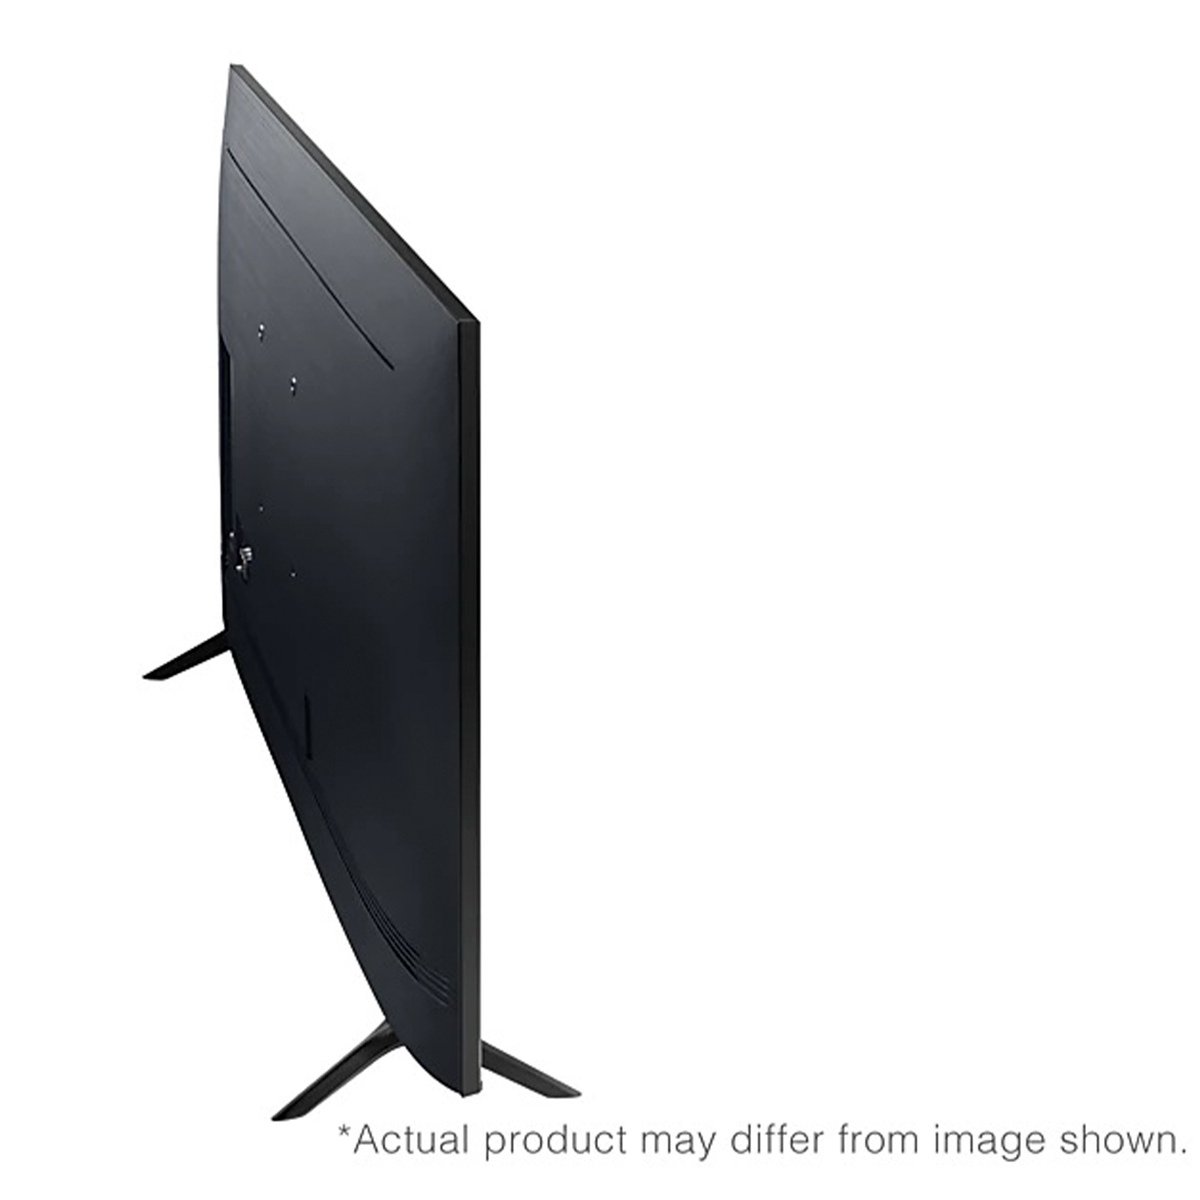 Samsung Smart 4K UHD TV UA82TU8000UXZN 82Inches Series(2020)